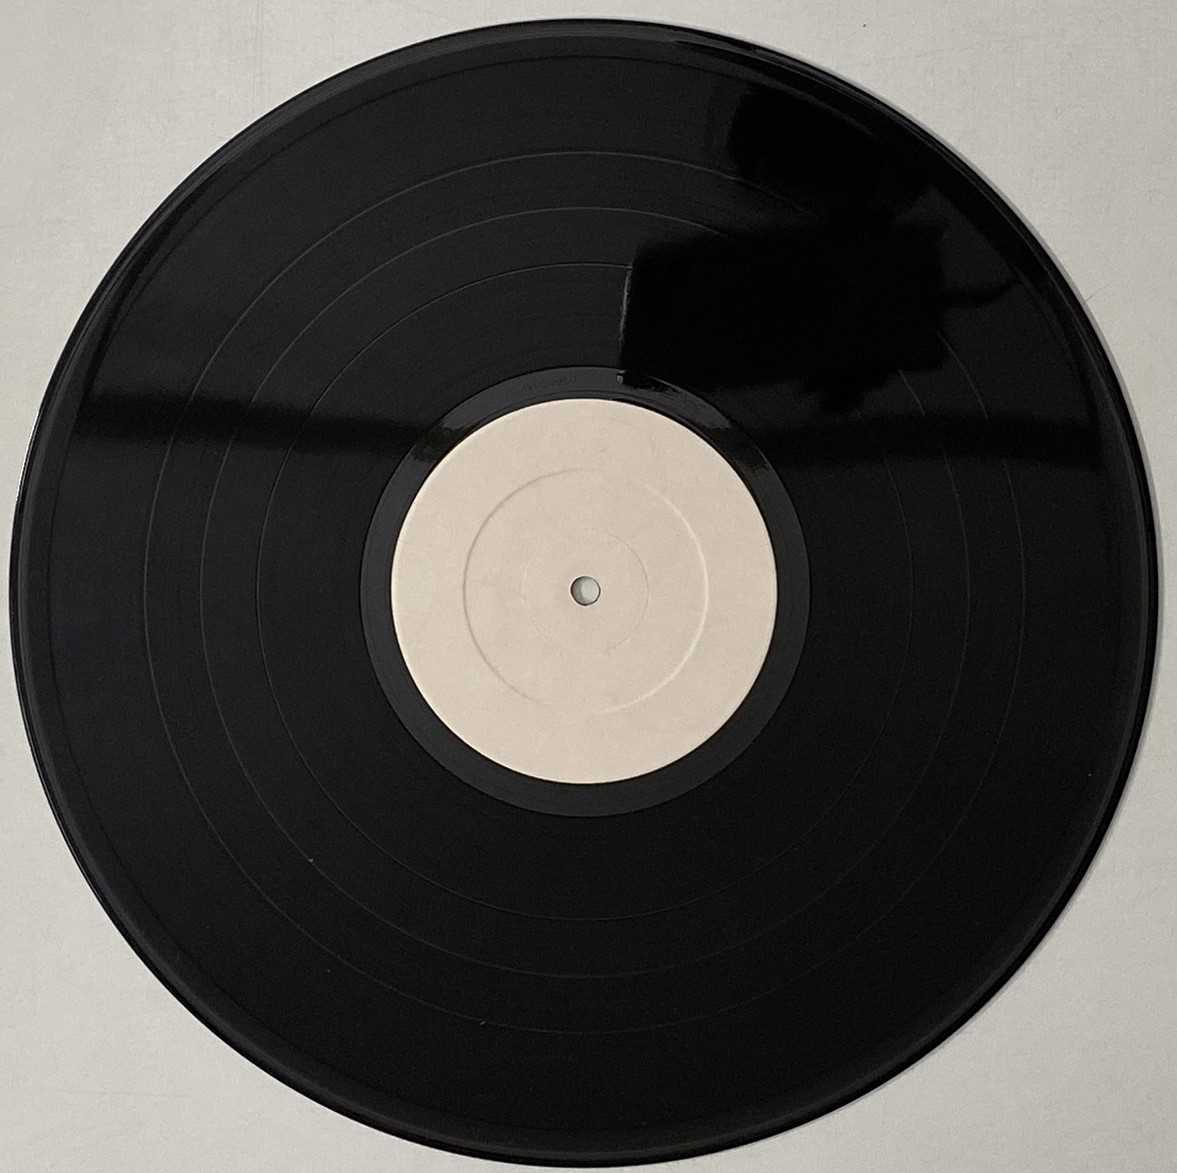 DIAMOND HEAD - THE WHITE ALBUM LP (ORIGINAL UK WHITE LABEL COPY - MMDHLP 15) - Image 2 of 2